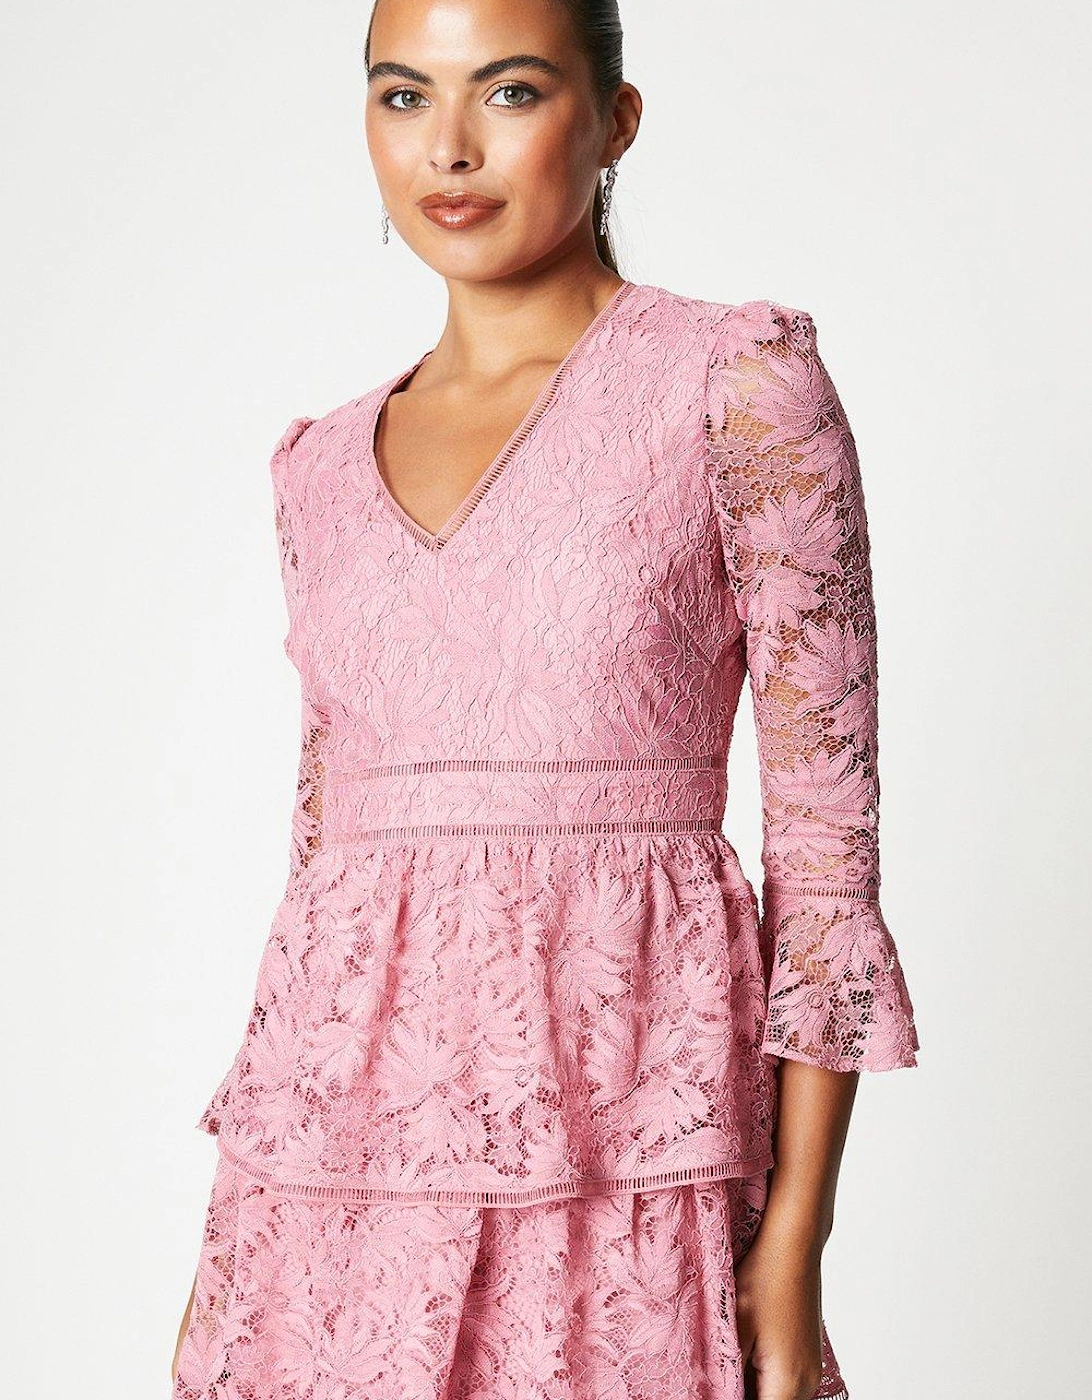 Layered Lace Dress With Ruffle Sleeve